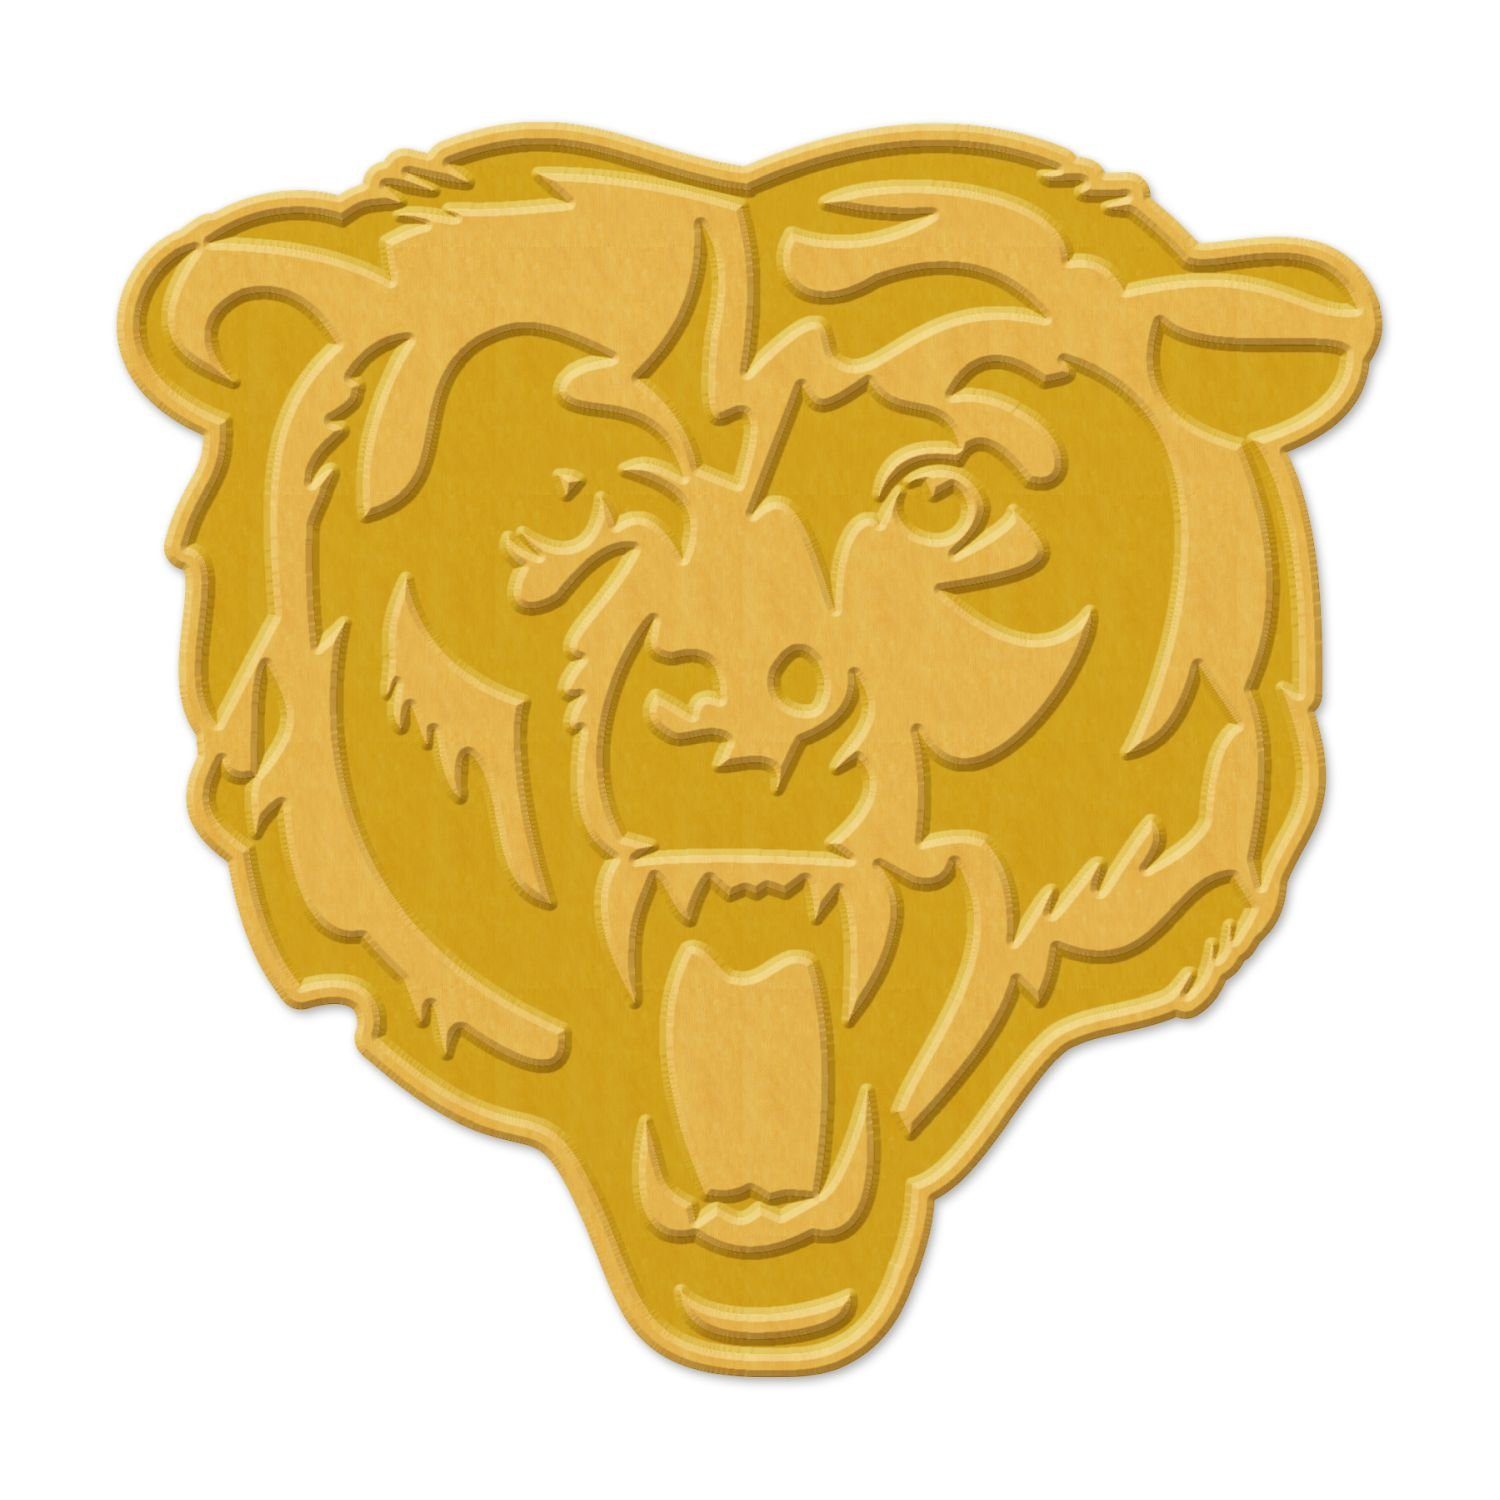 WinCraft Pins Universal Schmuck Caps PIN GOLD NFL Teams Chicago Bears